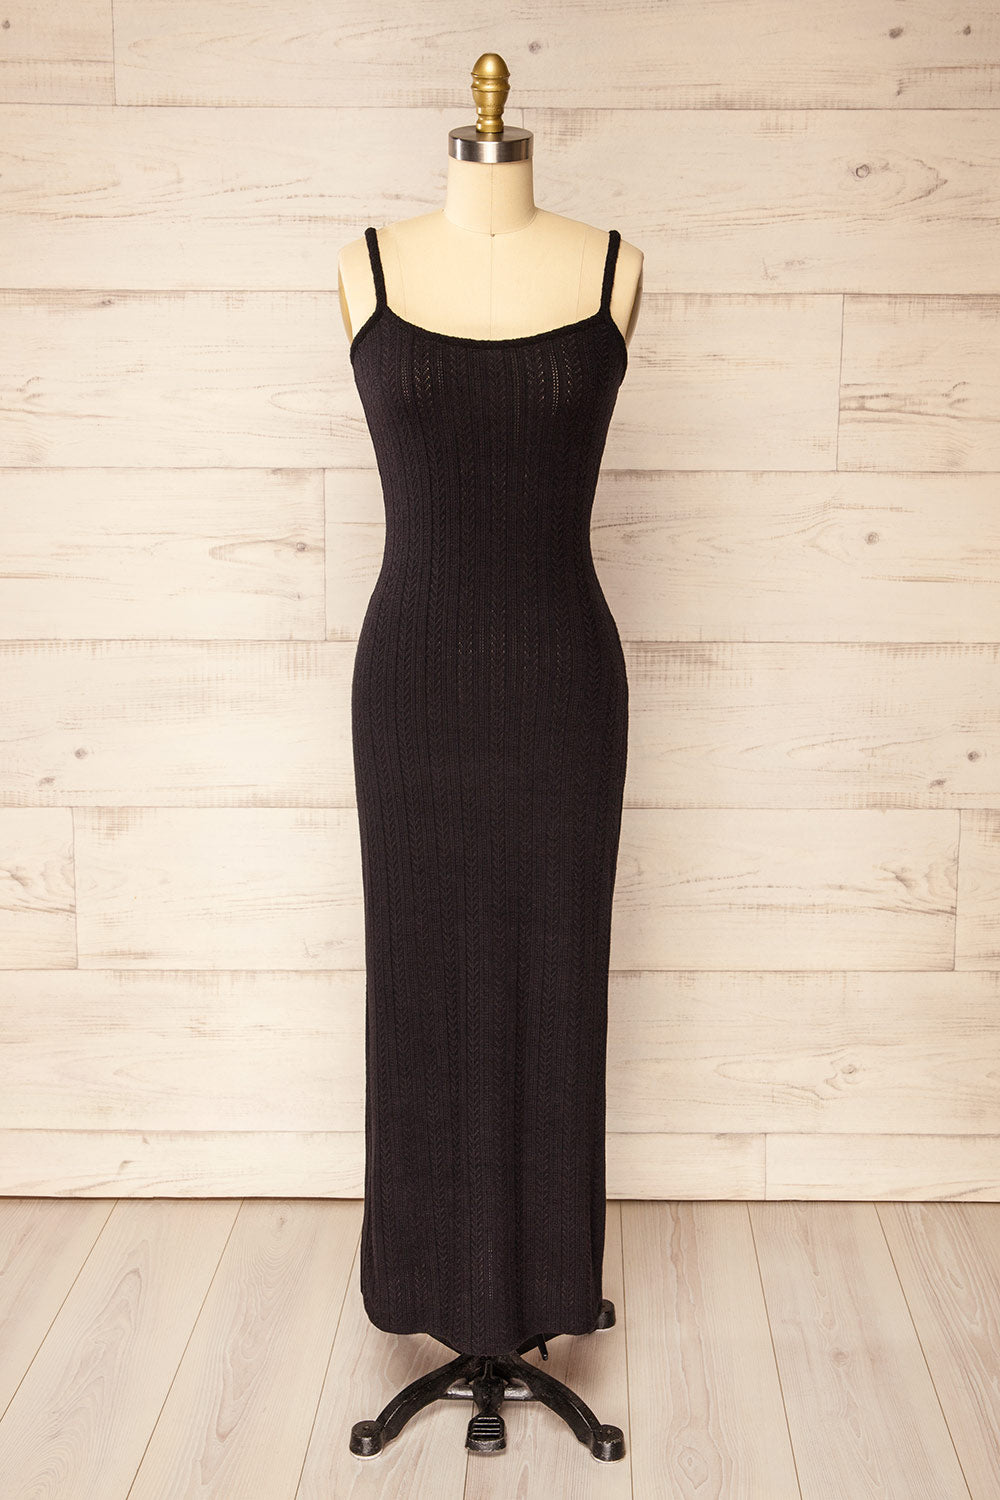 Katherine Black Knit Maxi Dress w/ Thin Straps